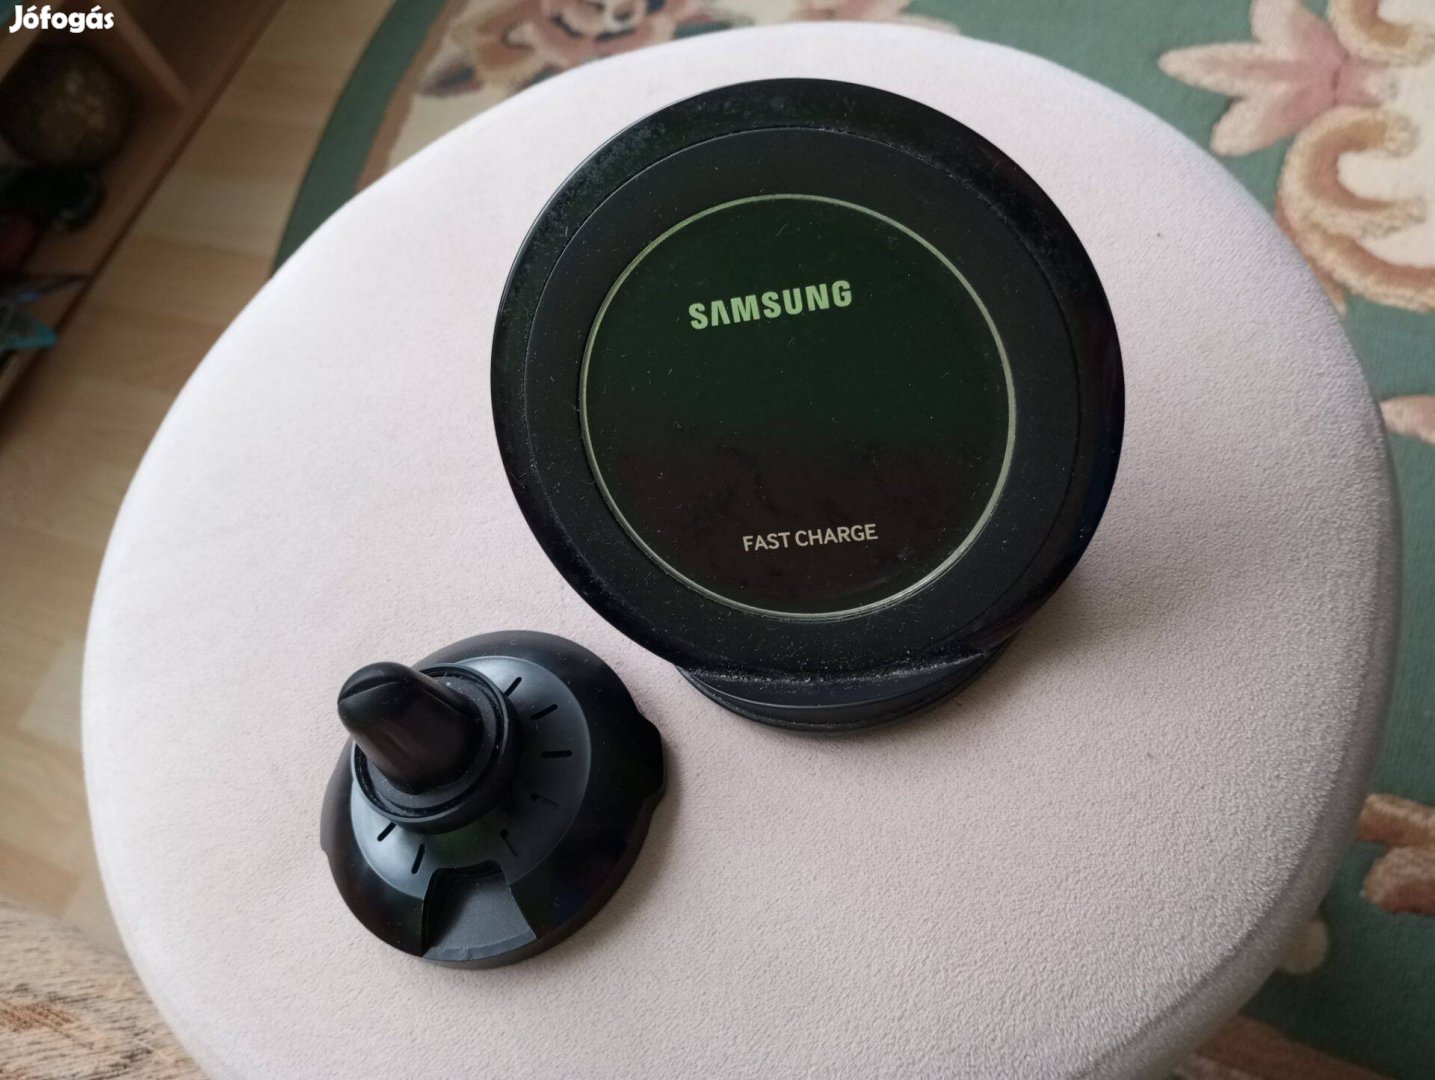 Samsung Fast Charge töltő 2 db Samsung mobil töltő